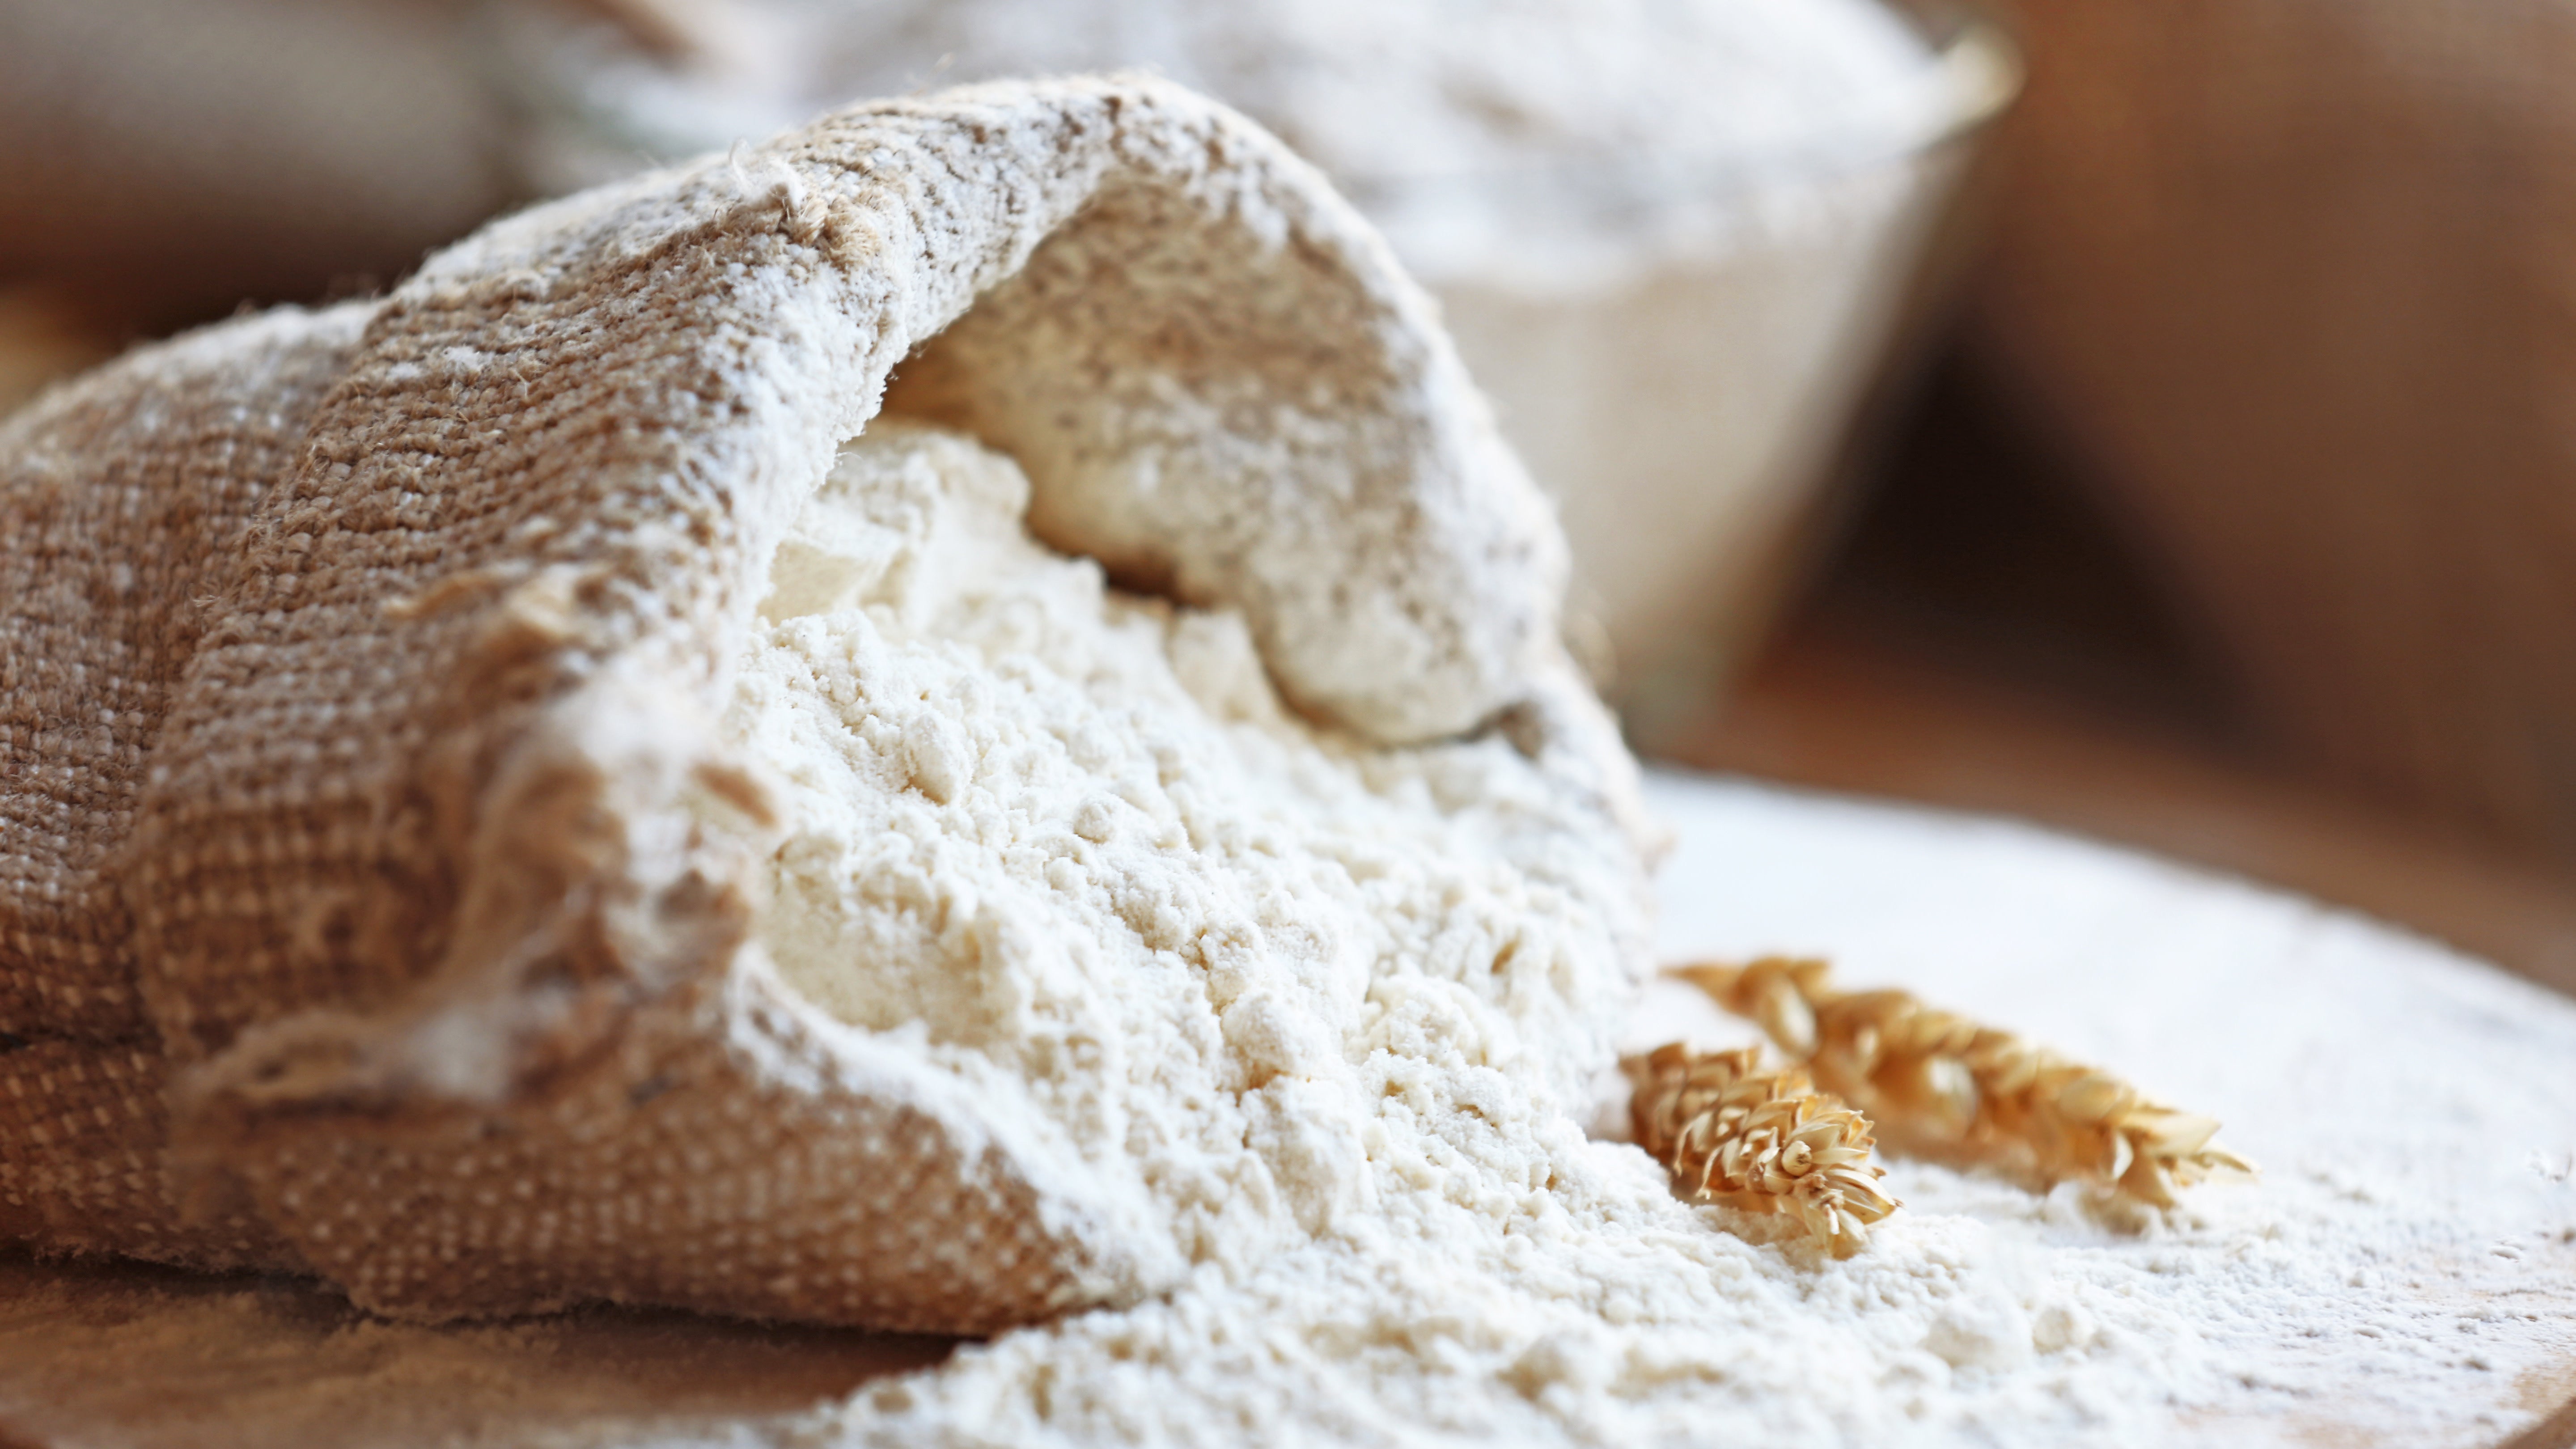 Make Your Own Self-Raising Flour